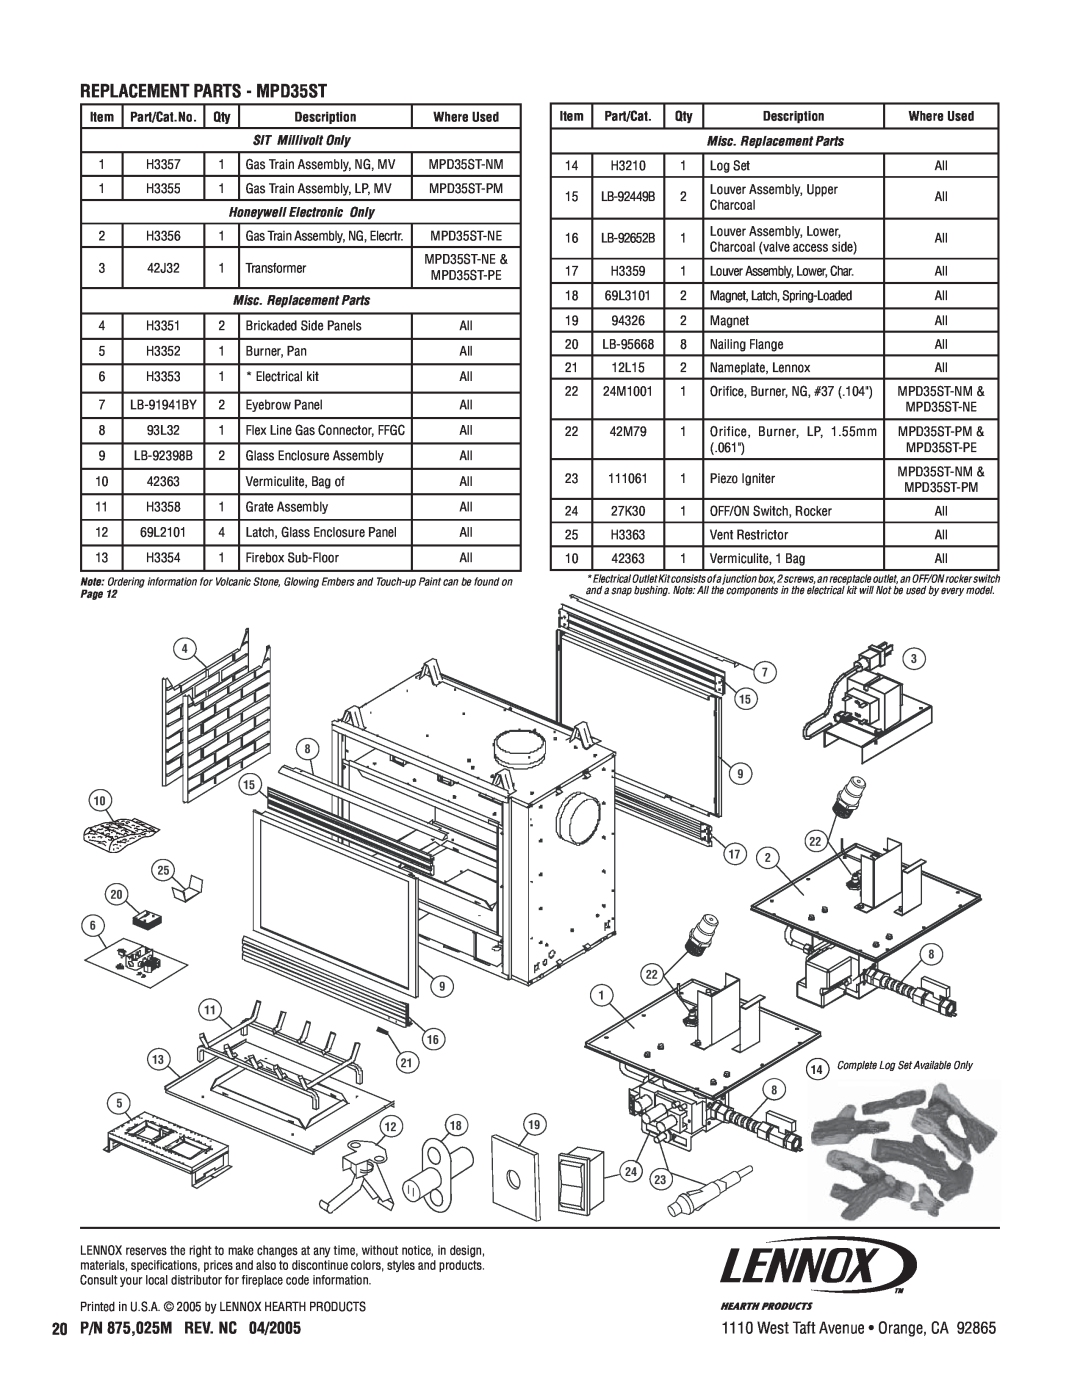 Lennox Hearth MPD35ST-NE, MPD35ST-NM, MPD35ST-PM manual Description, Where Used, Part/Cat, Misc. Replacement Parts 